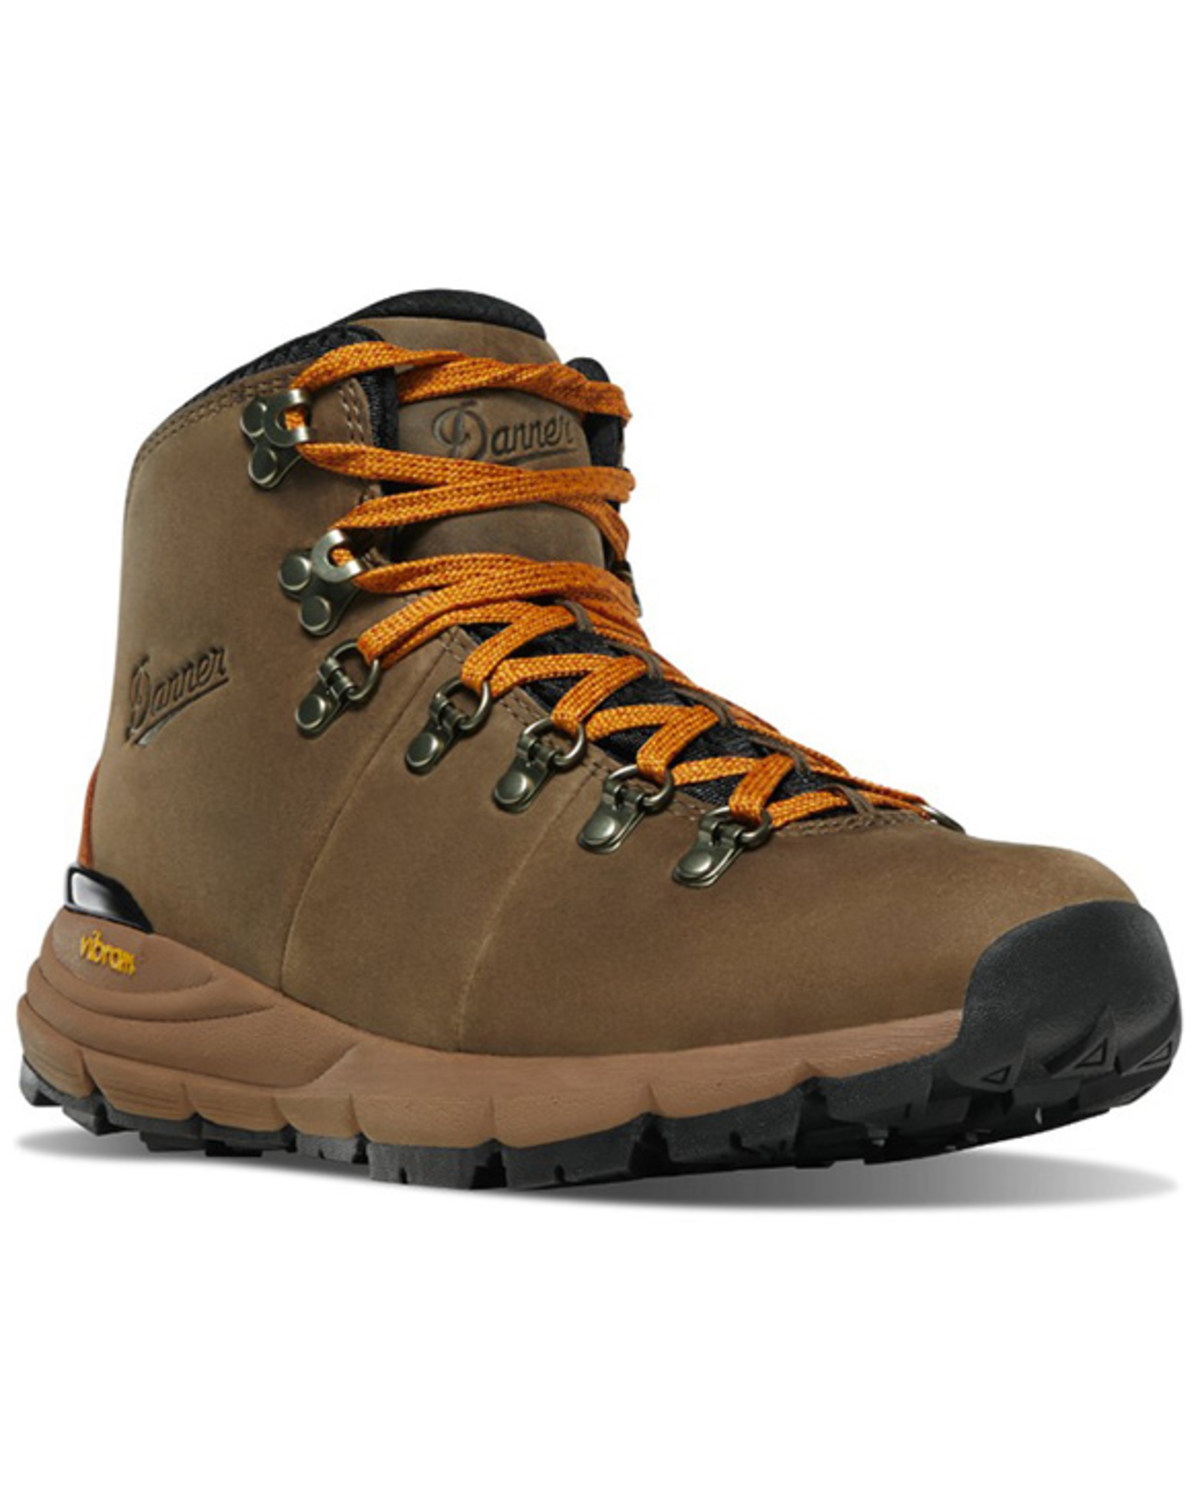 Danner Men's Mountain 600 Waterproof Hiking Boots - Soft Toe